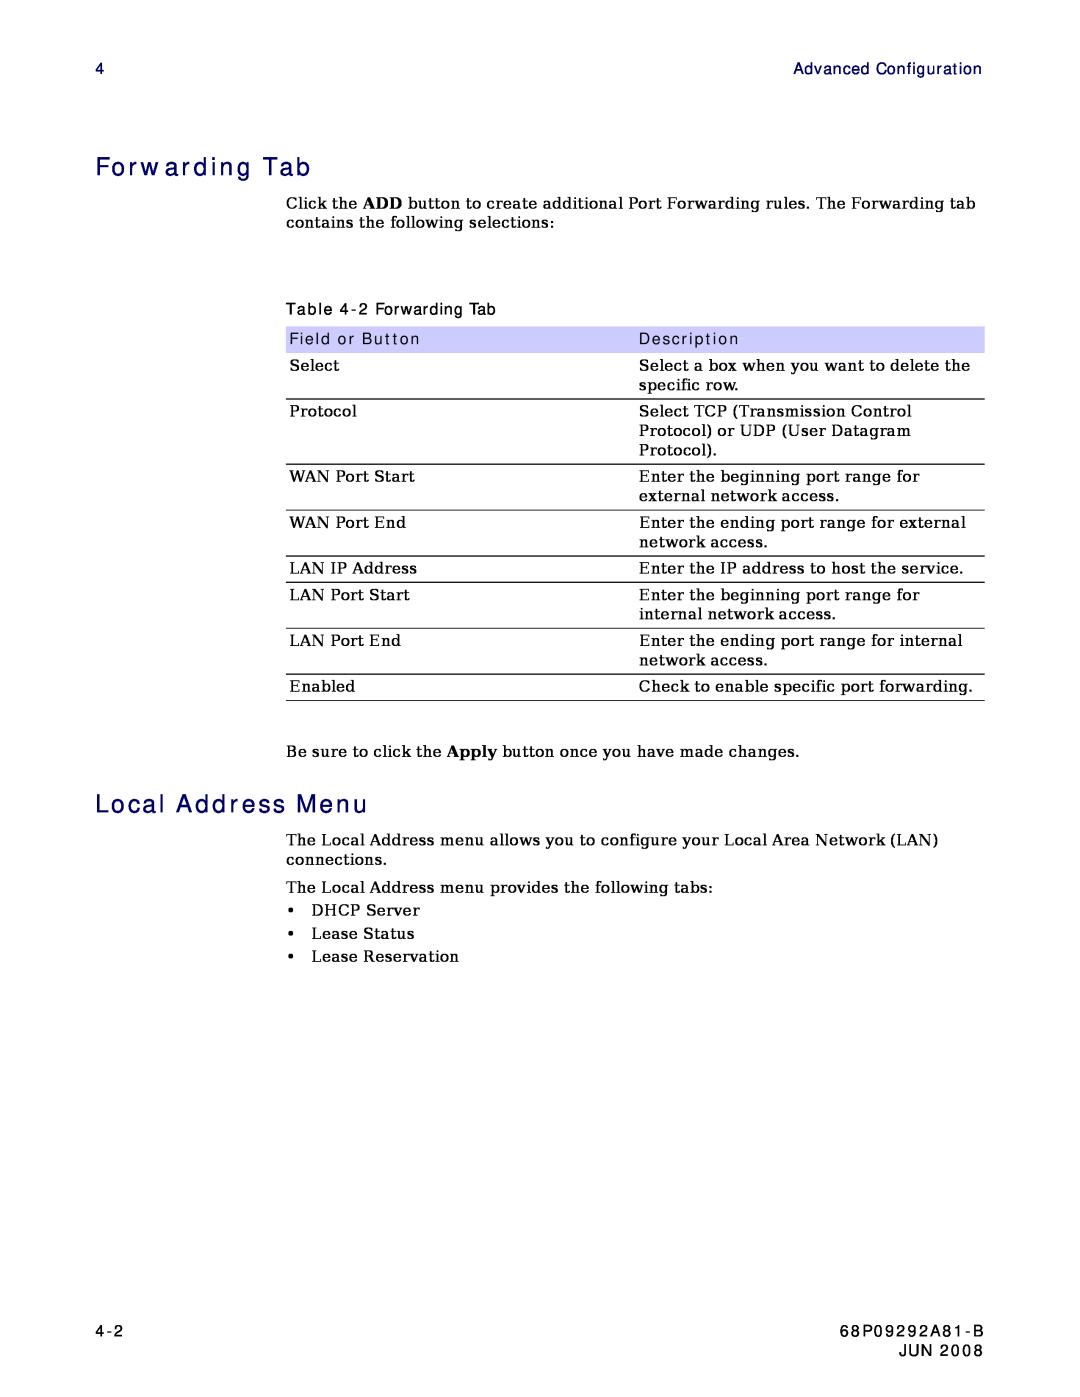 Motorola CPEI 750 manual Forwarding Tab, Local Address Menu, Field or Button, Description, 68P09292A81-B 